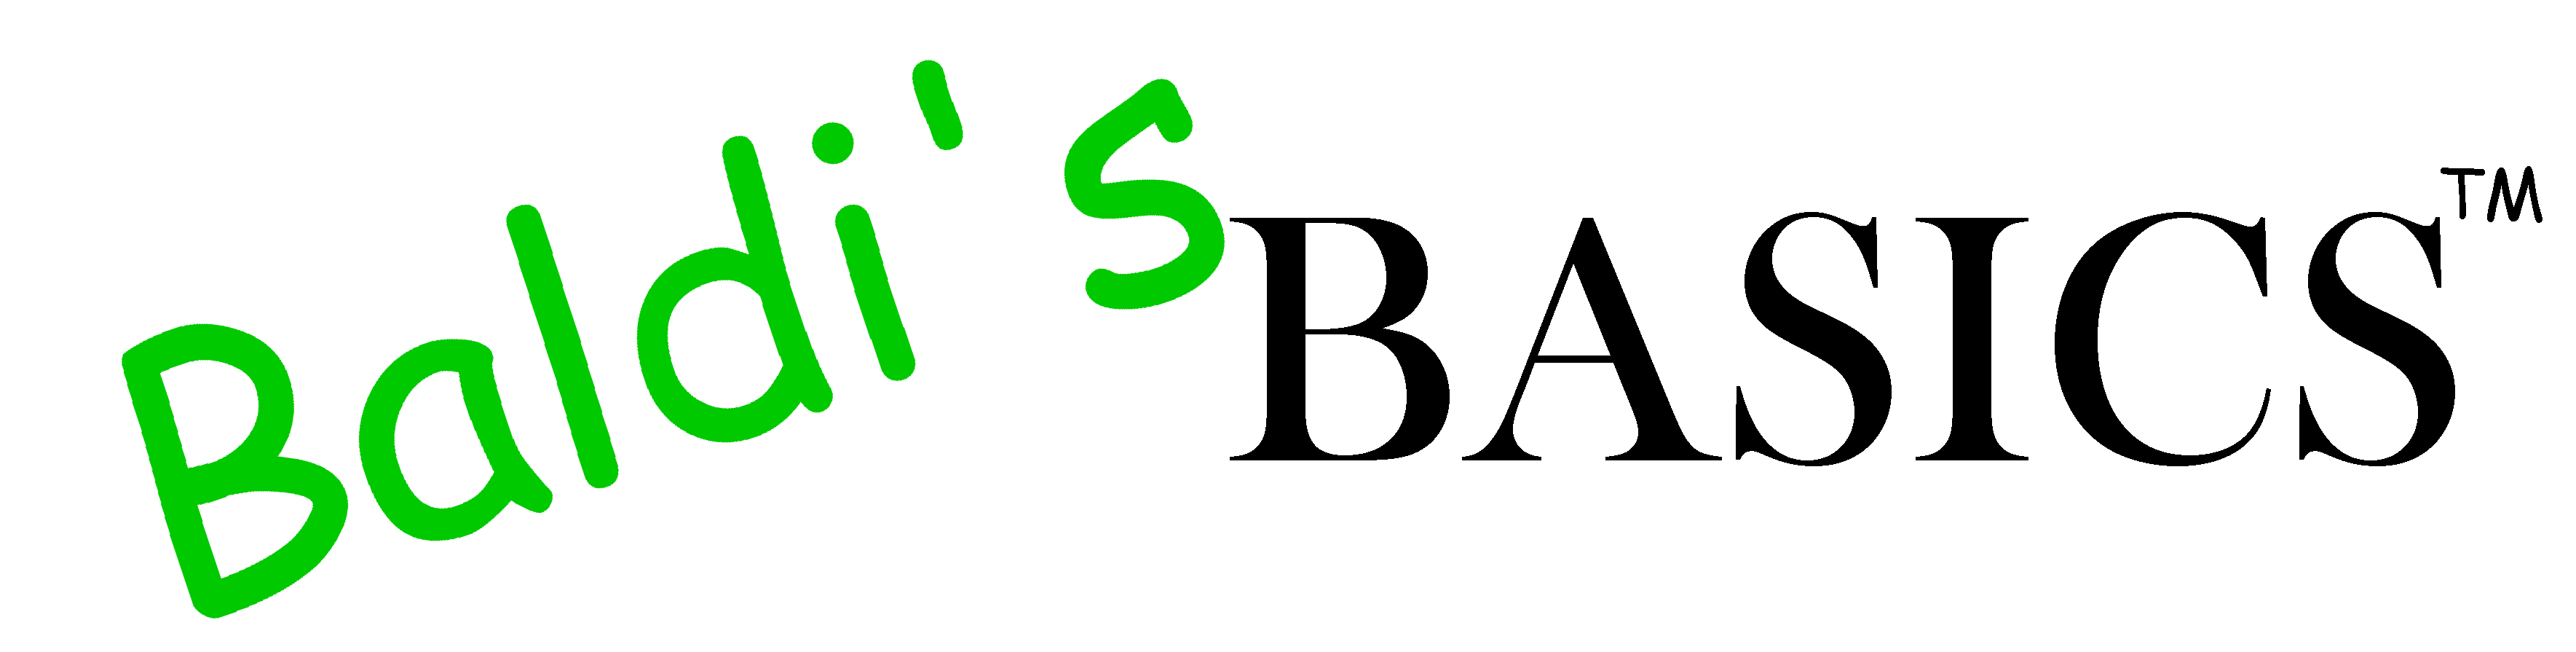 БАЛДИ бейсикс. БАЛДИ логотип. Baldi Basics logo. Baldi's Basics in Education and Learning логотип. Basically games